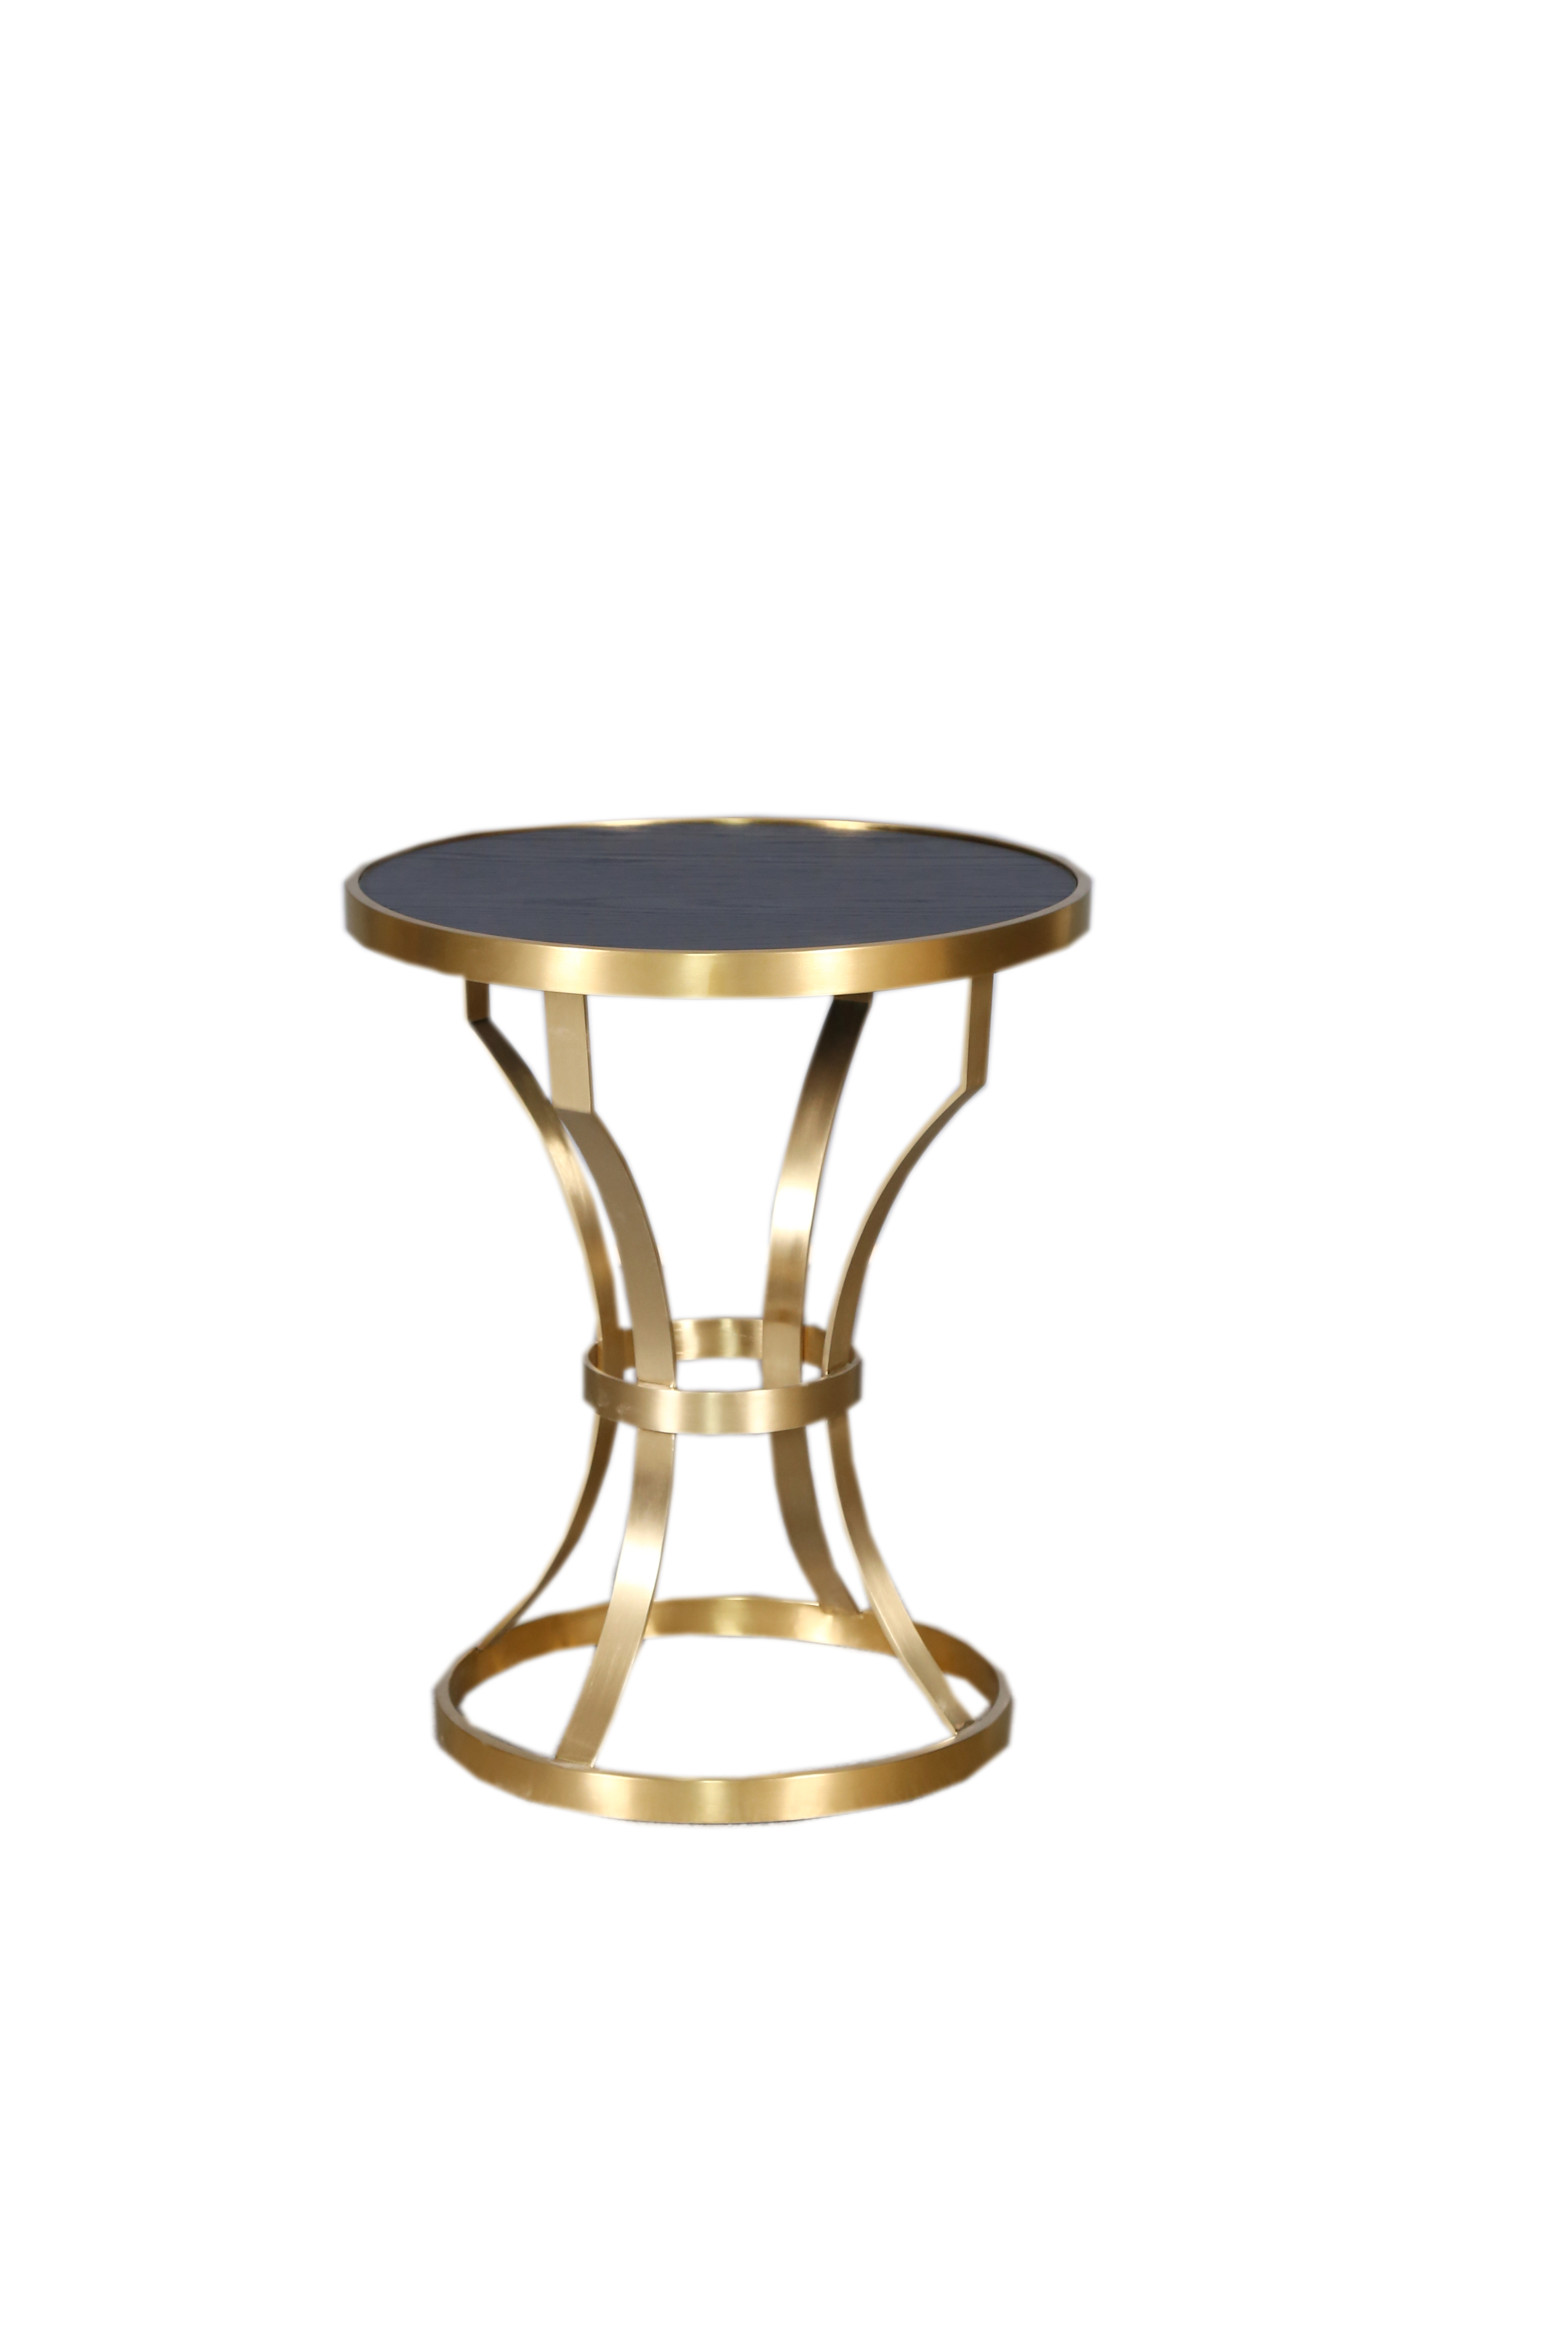 MU57-01 - Wrought iron round table